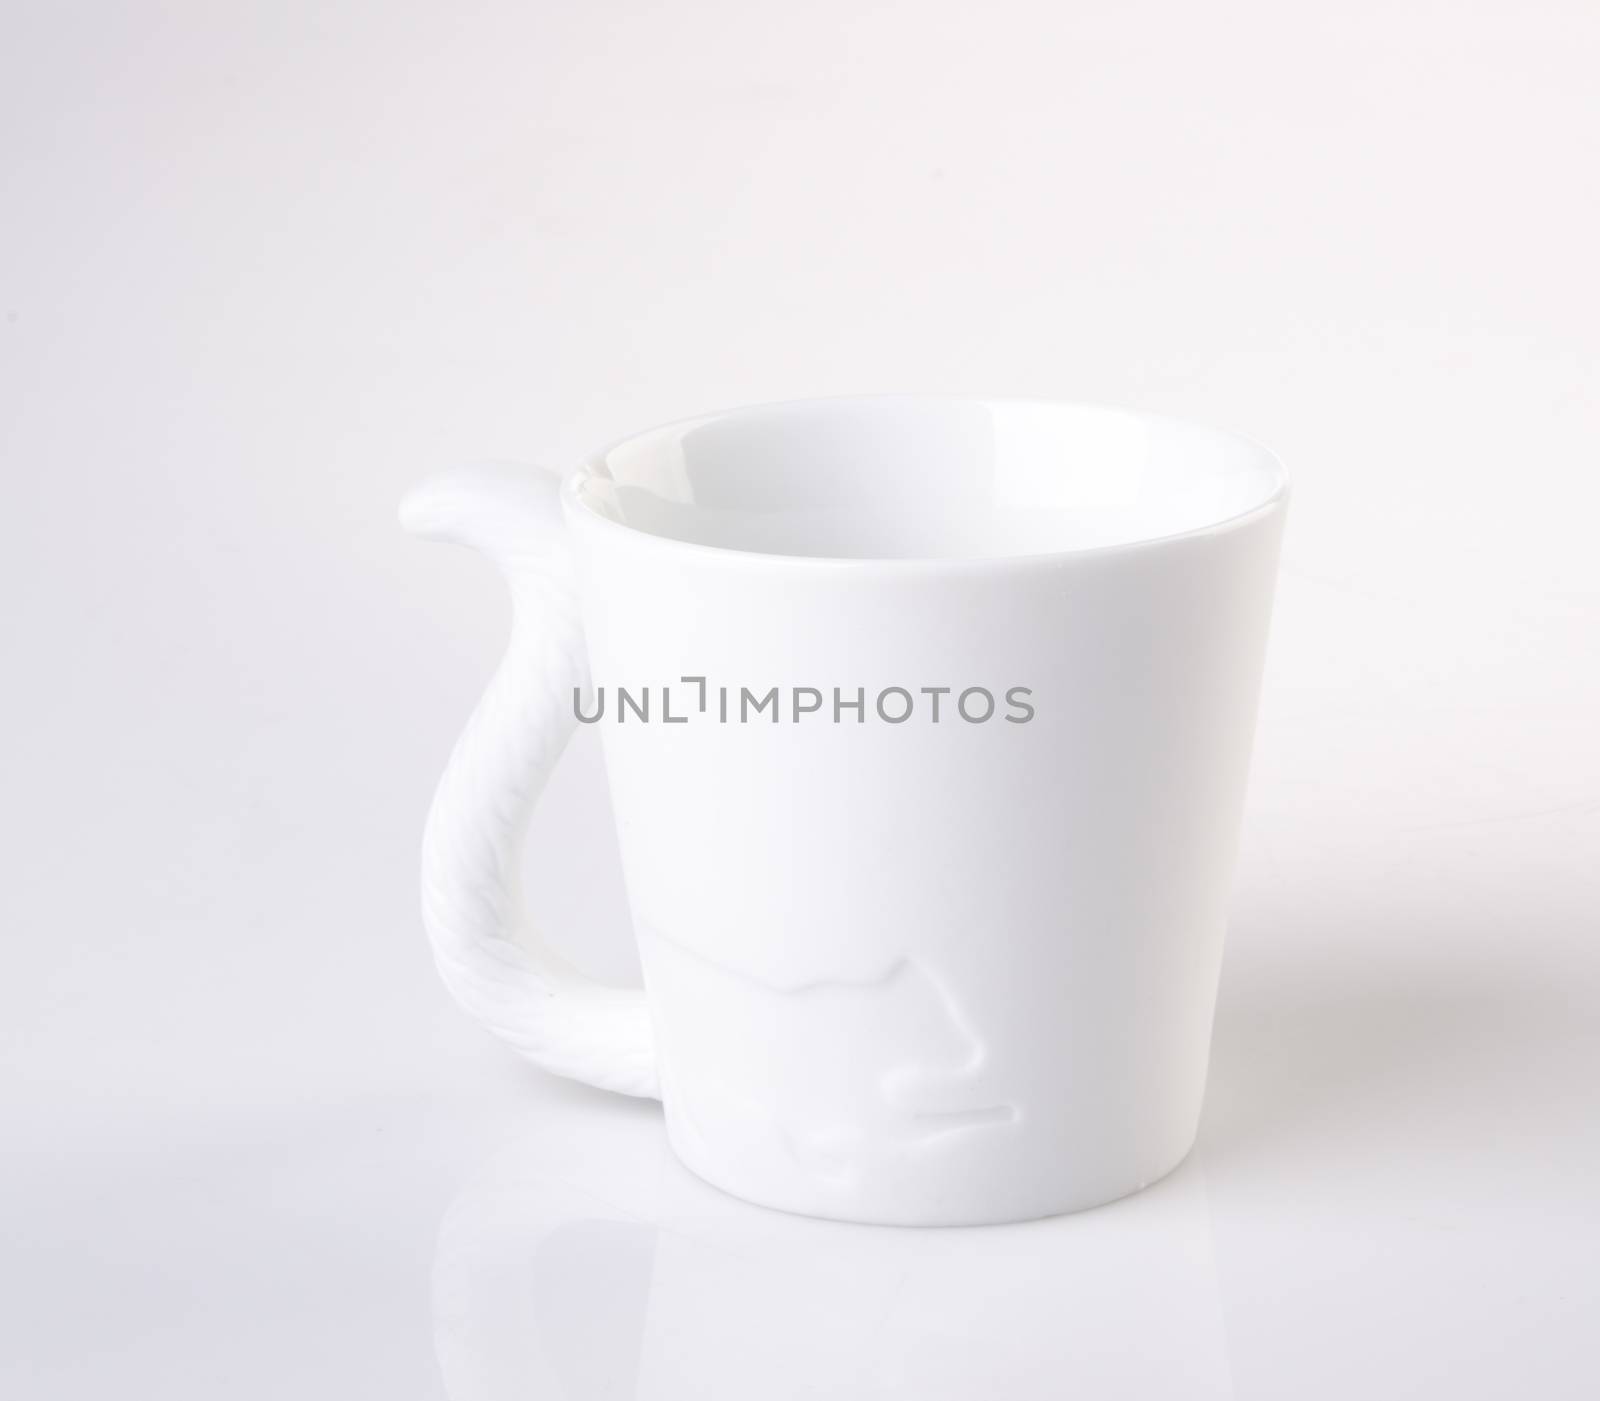 mug. ceramic mug on a background. mug. ceramic mug on a backgrou by heinteh